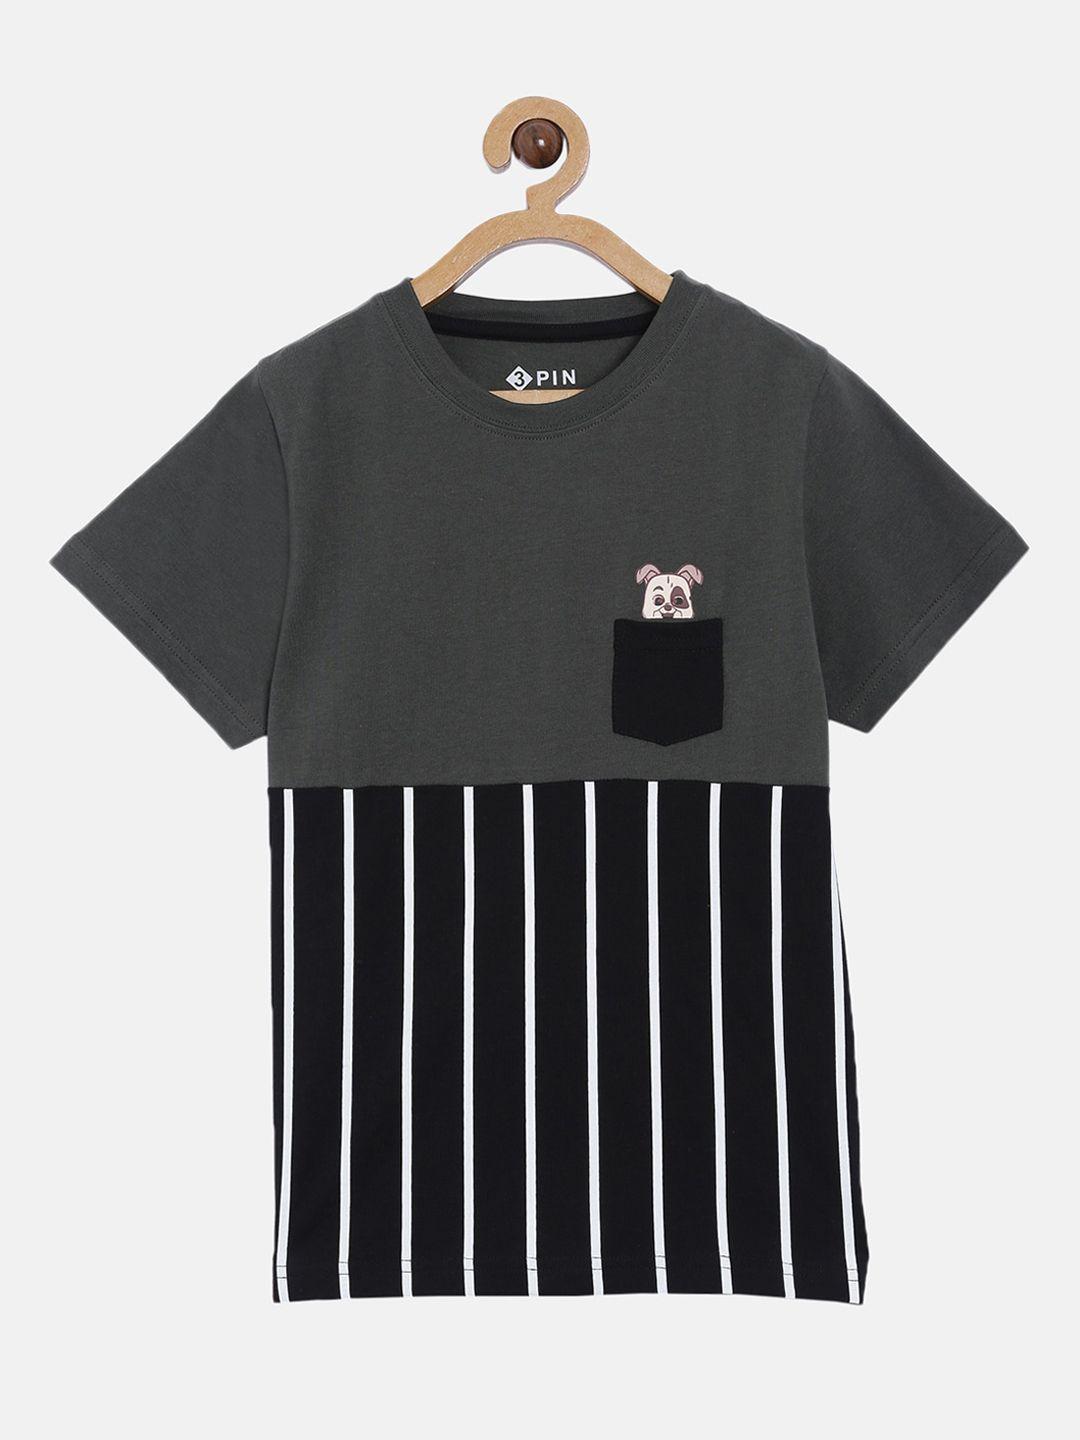 3pin-boys-black-striped-round-neck-t-shirt